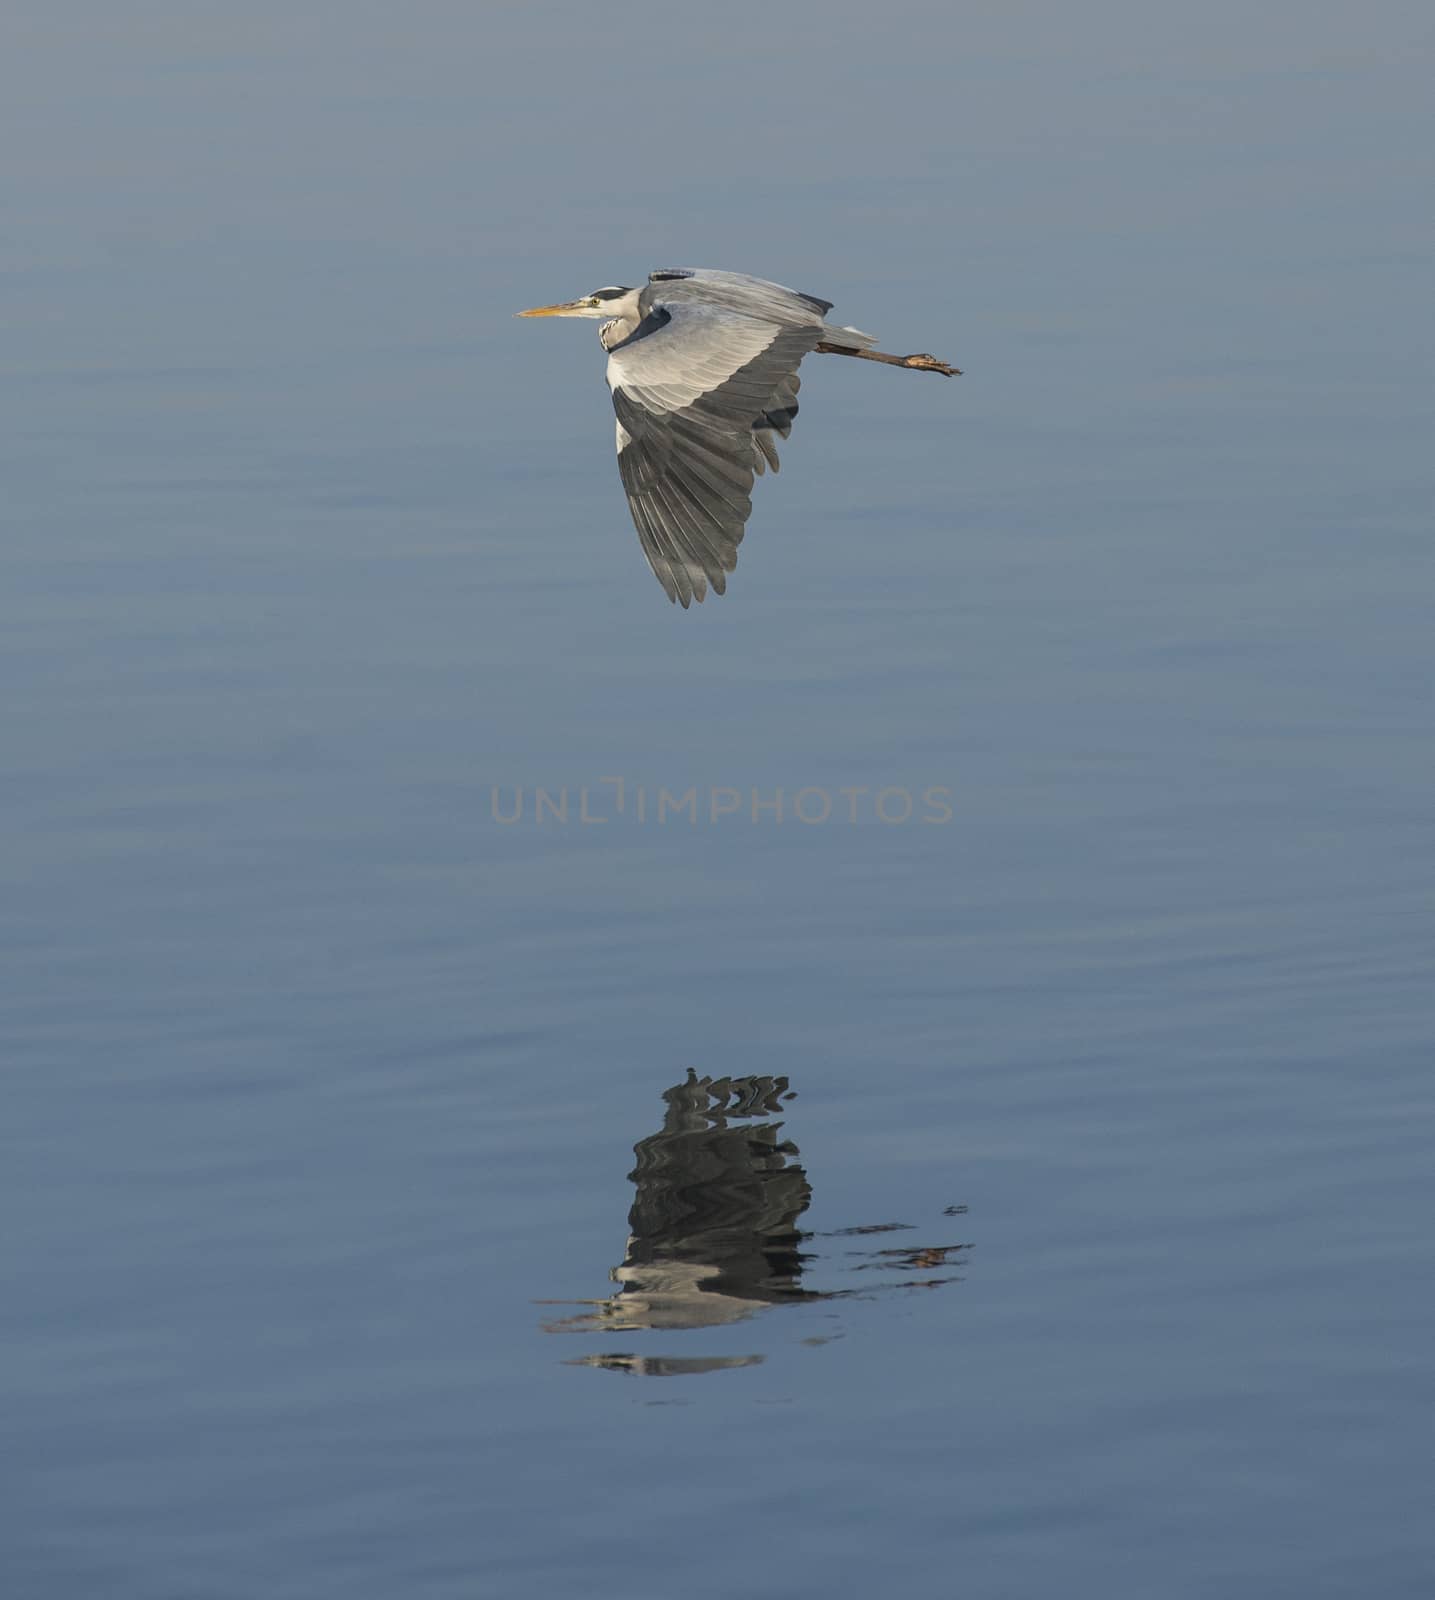 Grey heron ardea cinerea wild bird in flight flying over river water with reflection